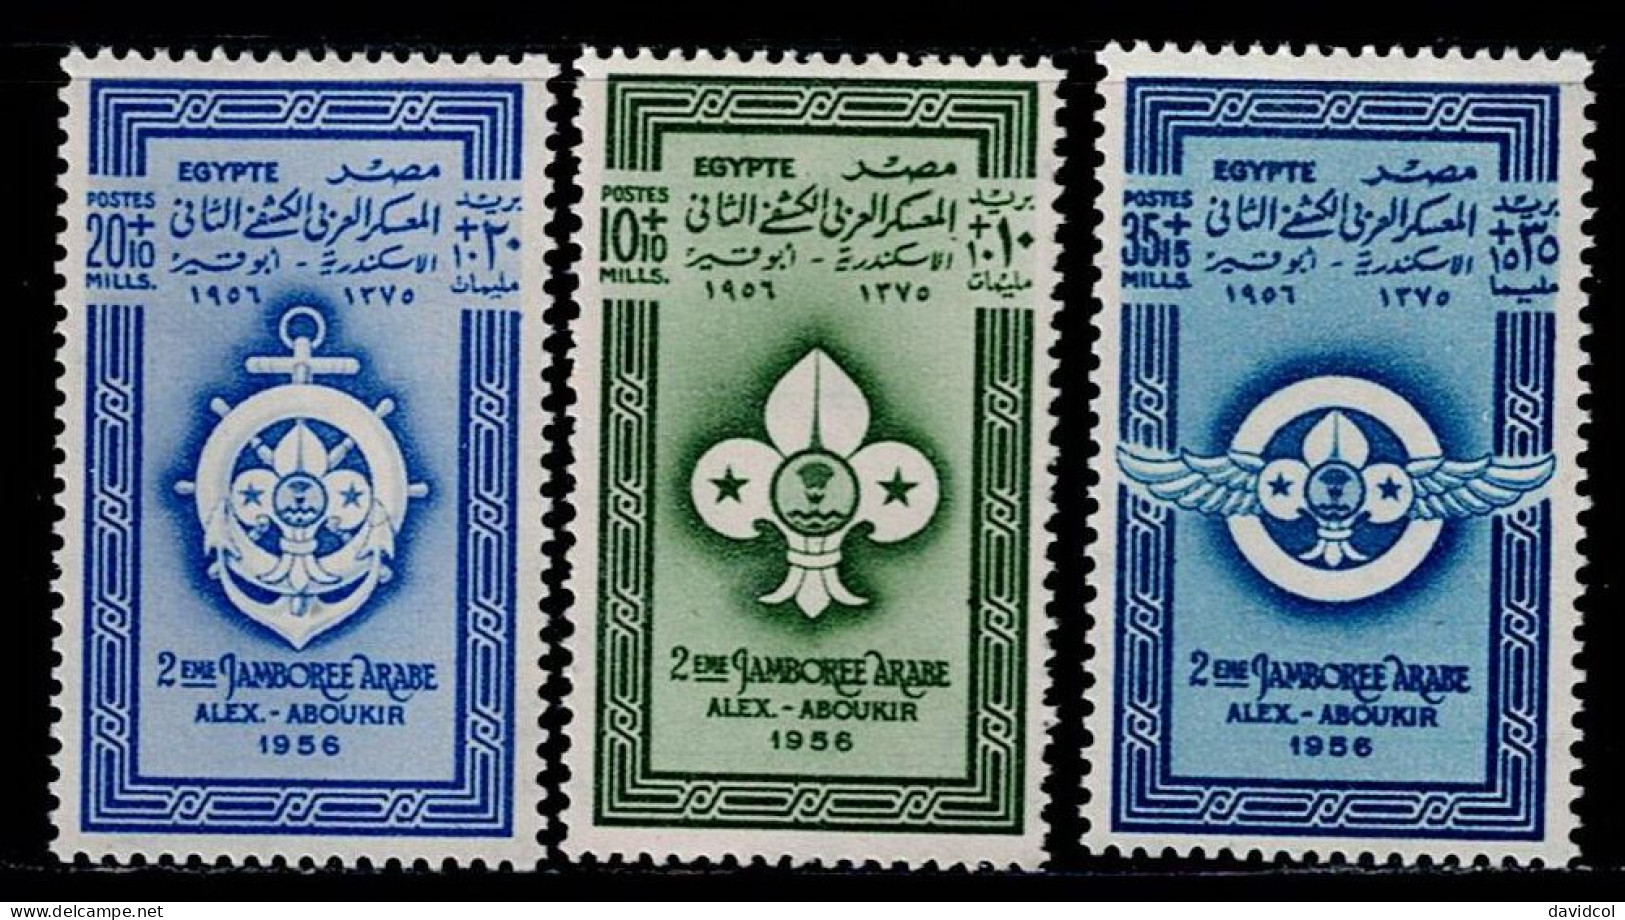 EGI-01- EGYPT - 1956 - MNH -SCOUTS- 2ND ARAB SCOUT JAMBOREE - Nuevos